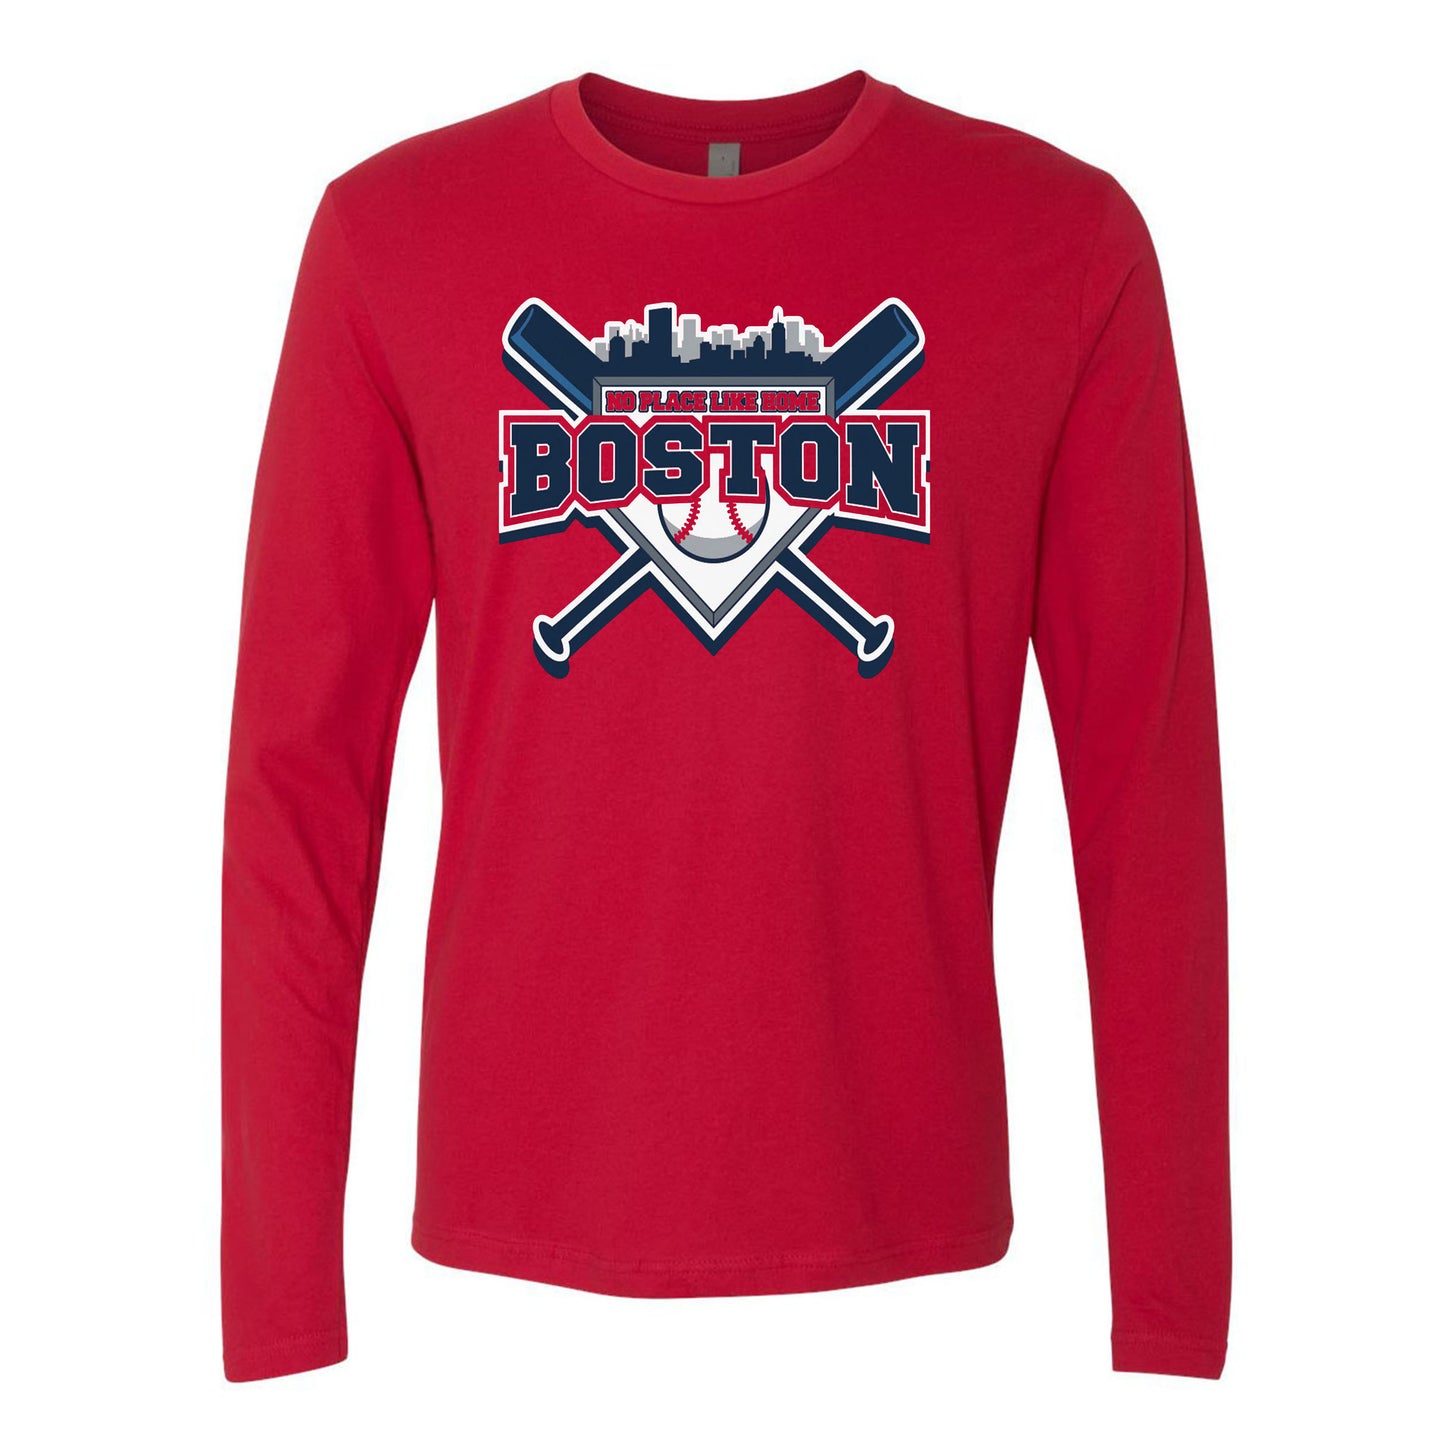 No Place Like Home T-Shirt for Boston Baseball Fans Boston Baseball Gear